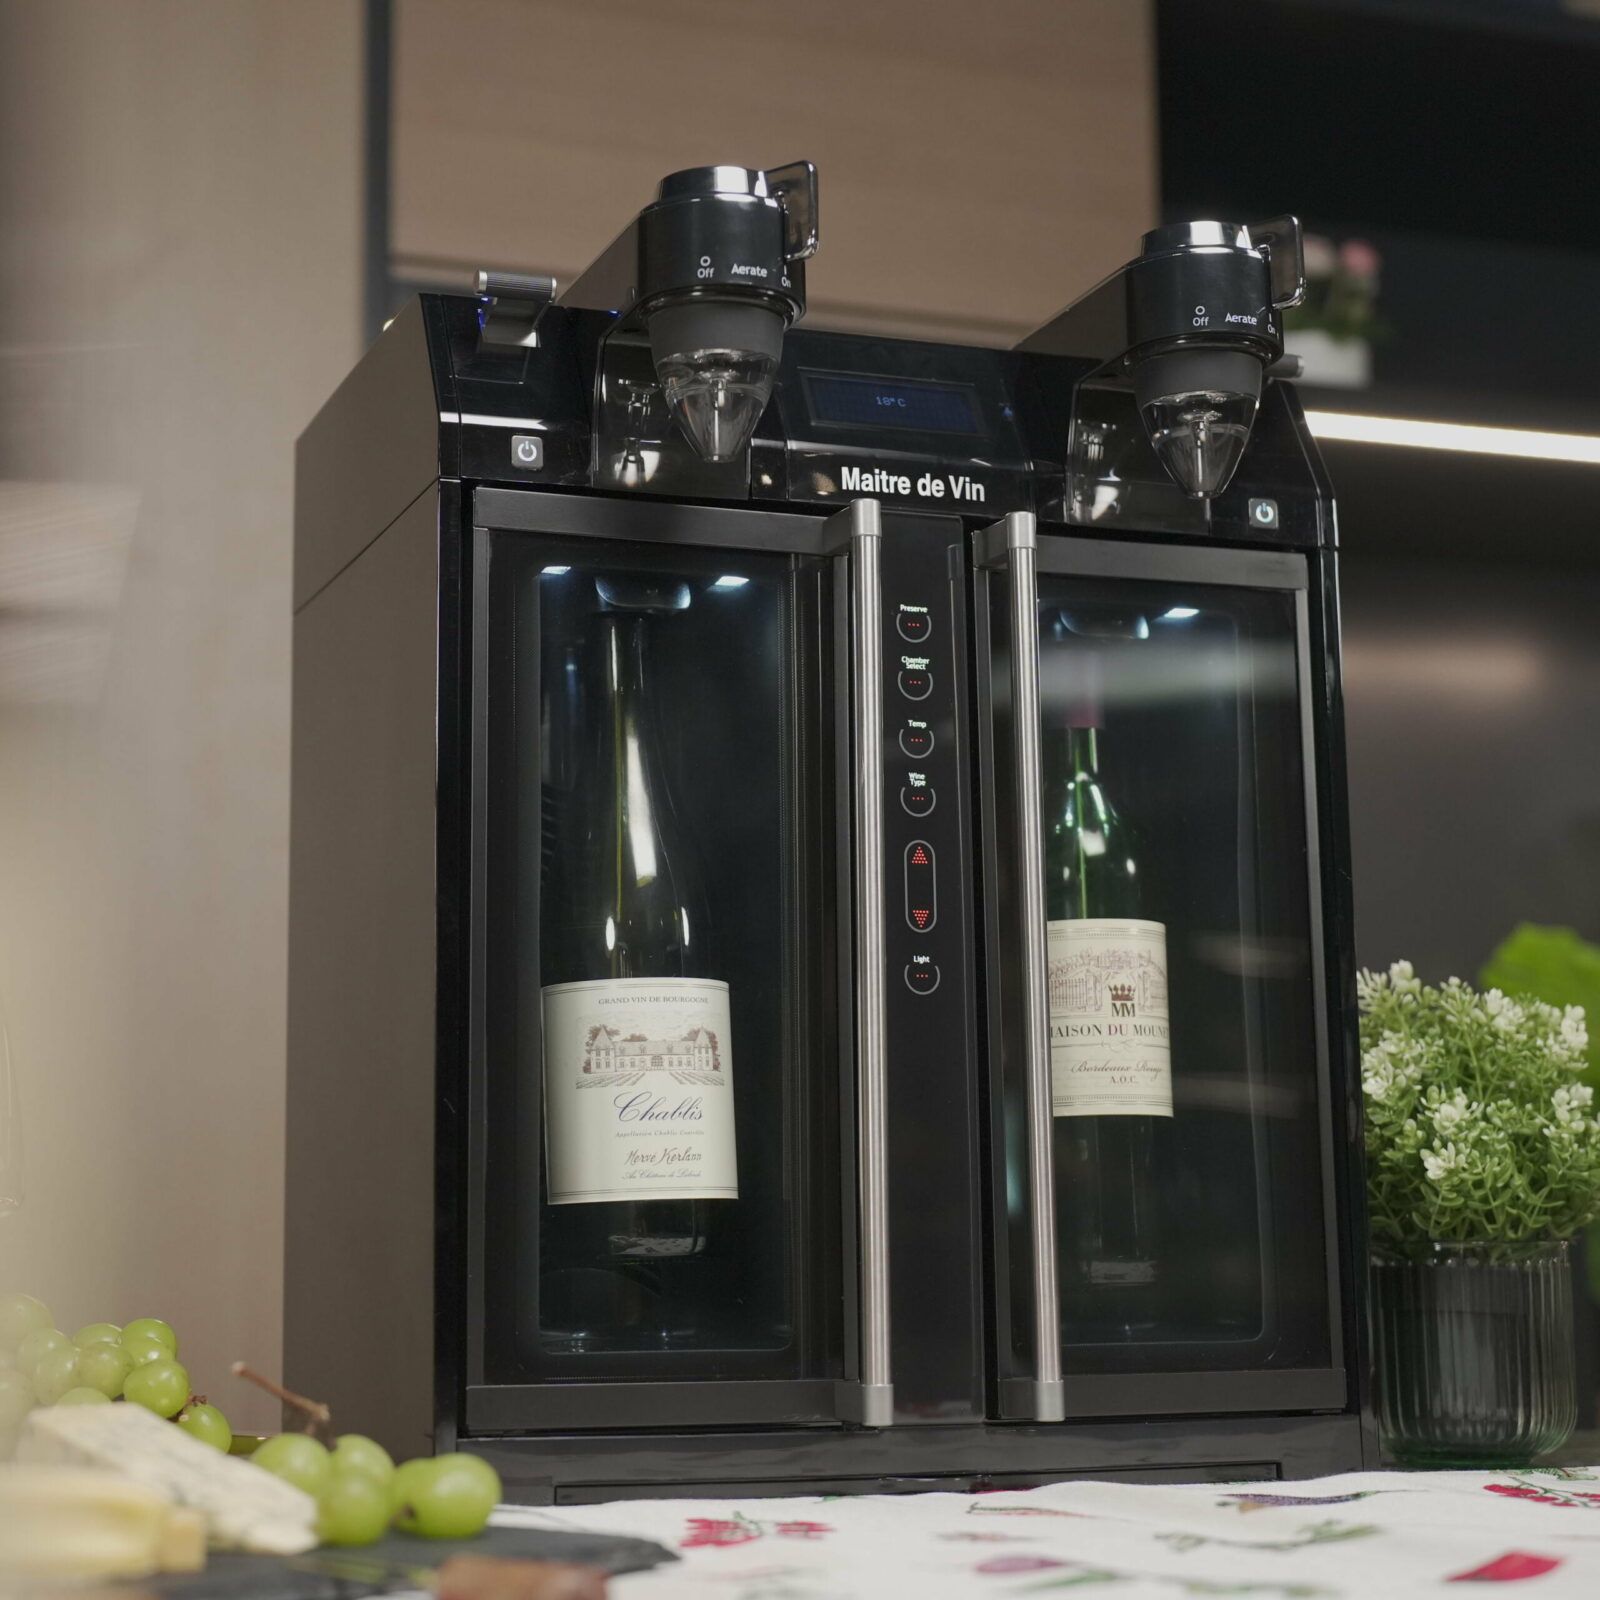 Wine Maven | Maitredevin wine cooler and dispenser scaled